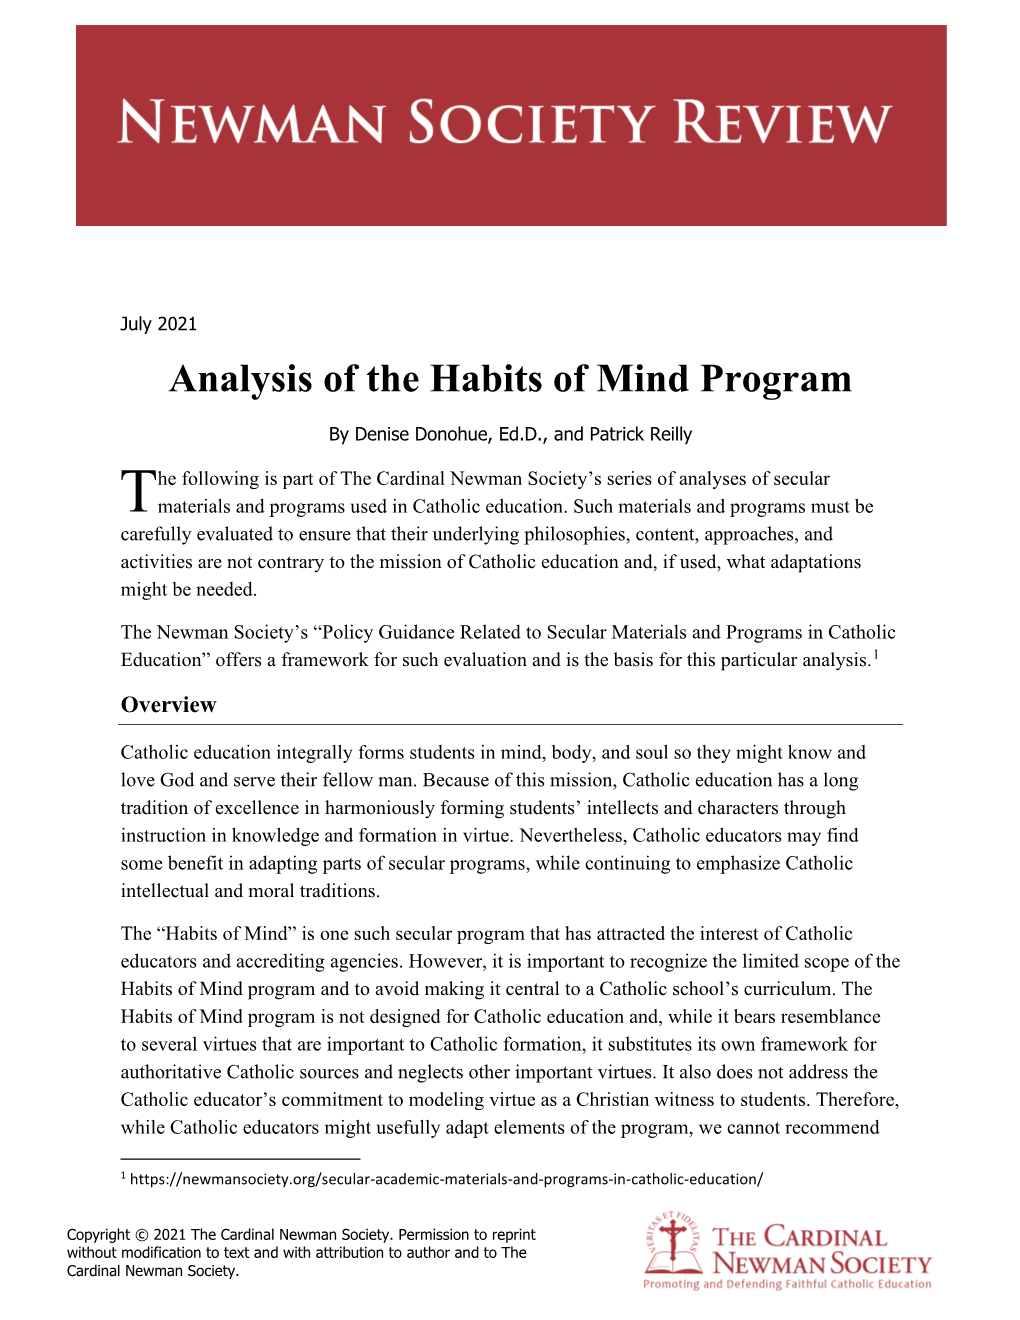 Analysis of the Habits of Mind Program